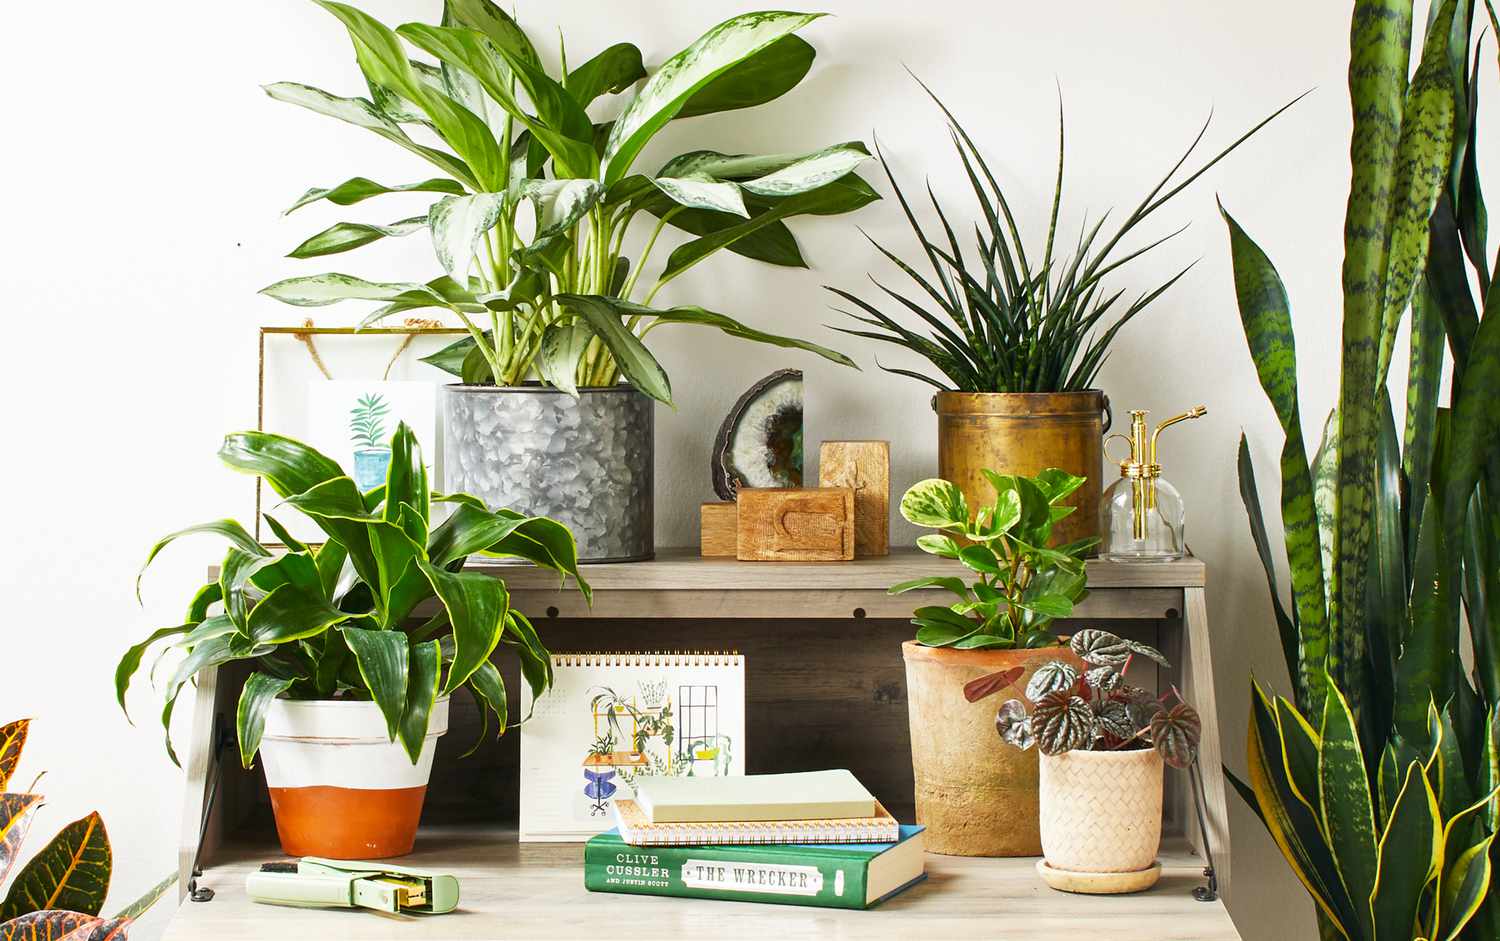 House Plants on a wooden shelf.